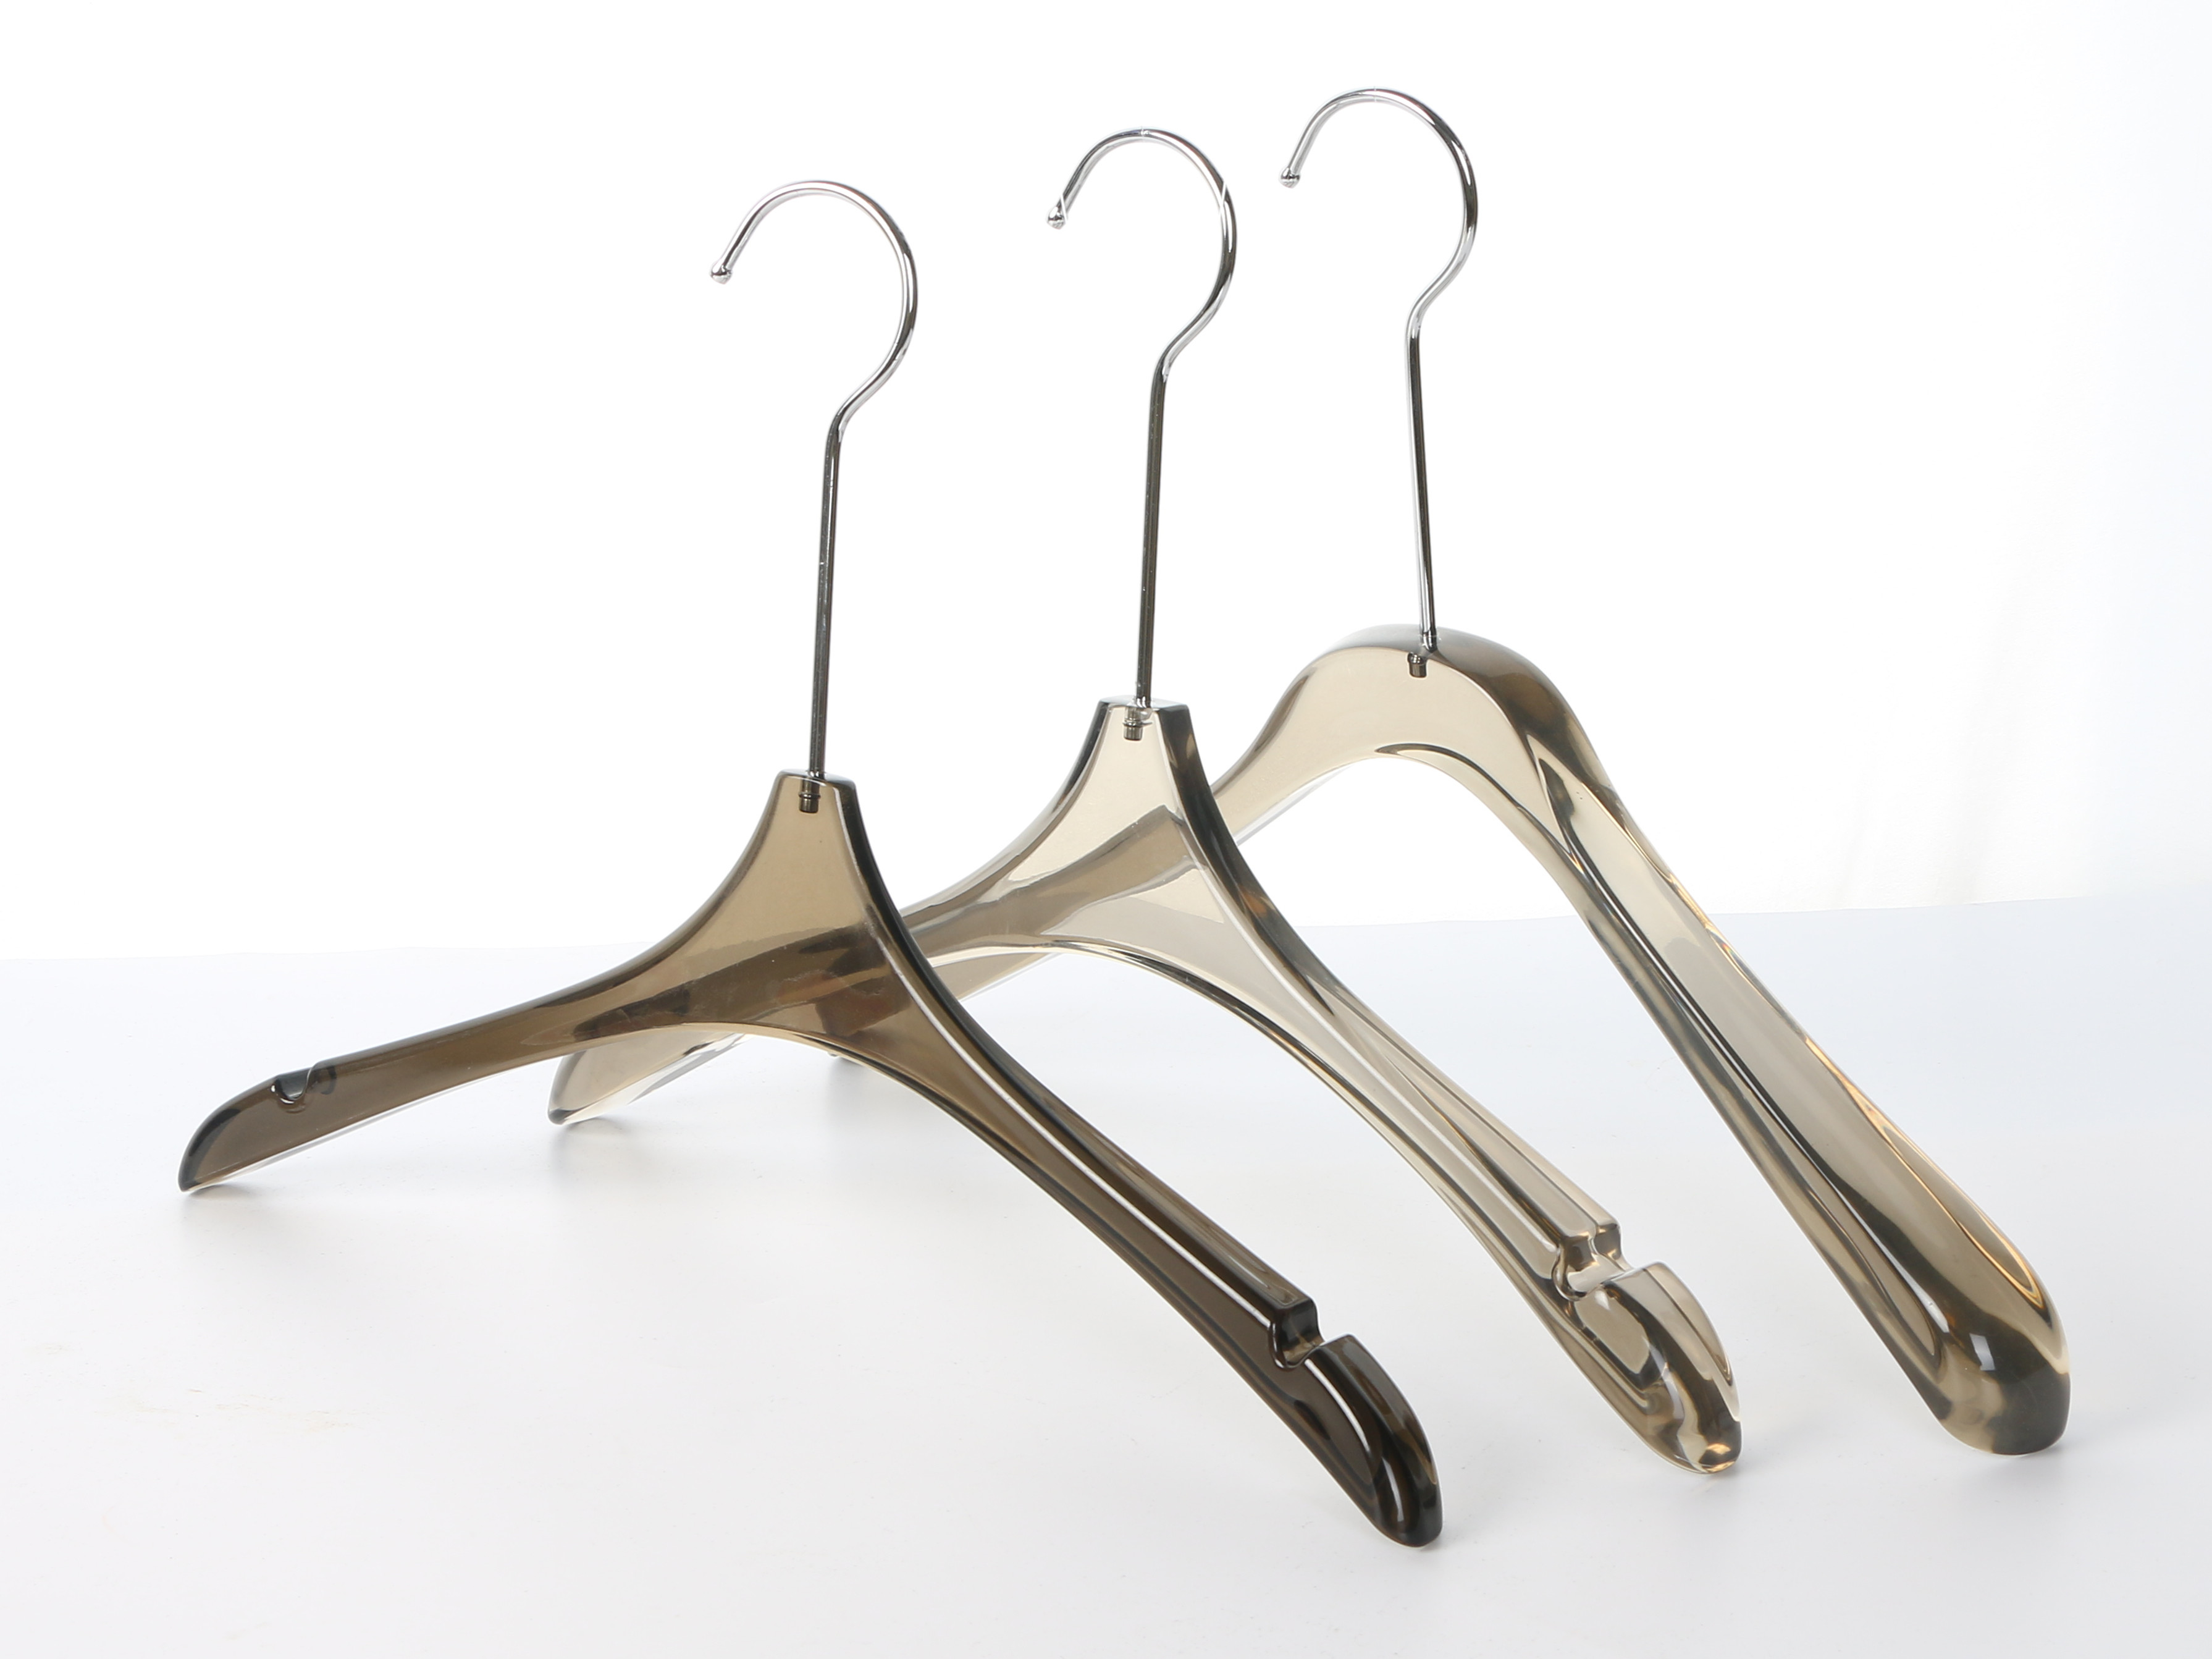 Acrylic Clothing Hangers Acrylic Hangers Chrome Acrylic Coat Hanger For Ladies Featured Image